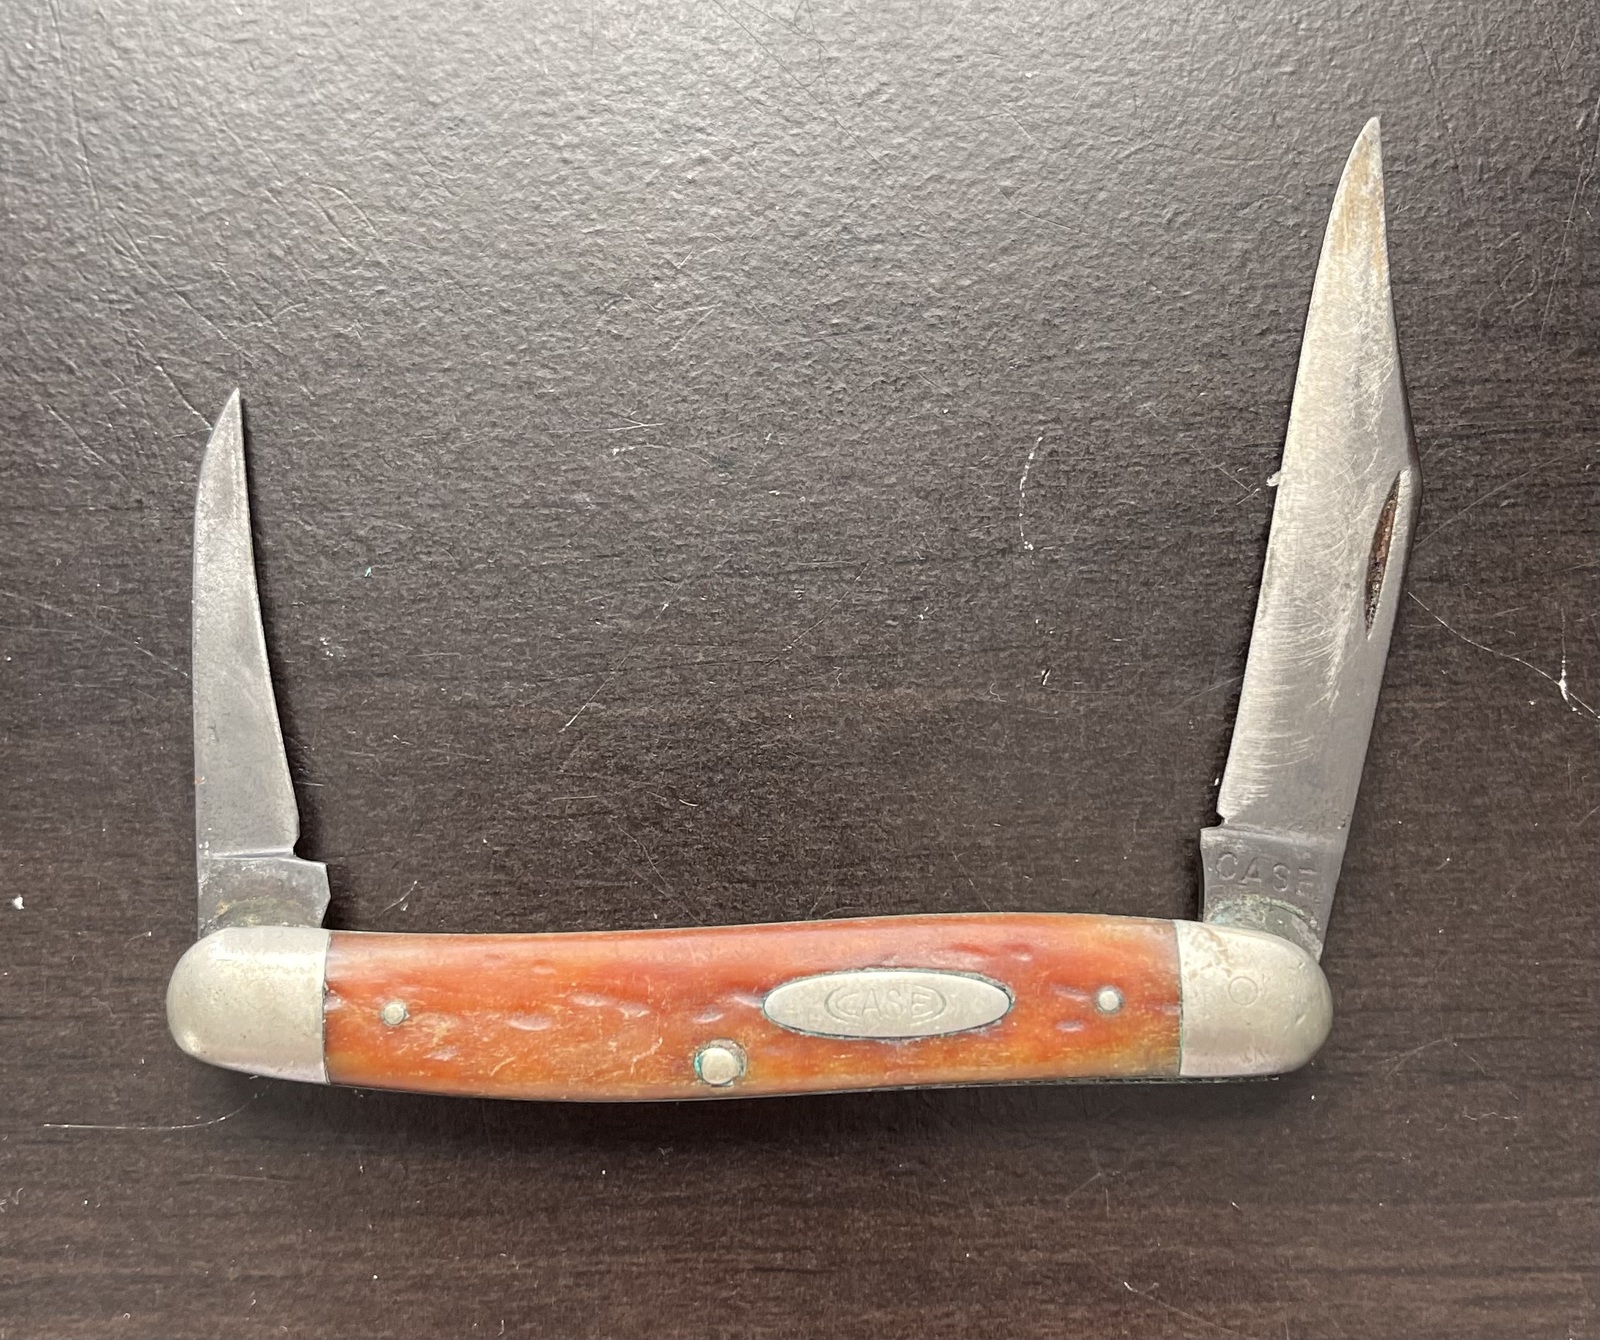 Case Double Sided Pocket Knife 1960s Model 0624 - $30.00